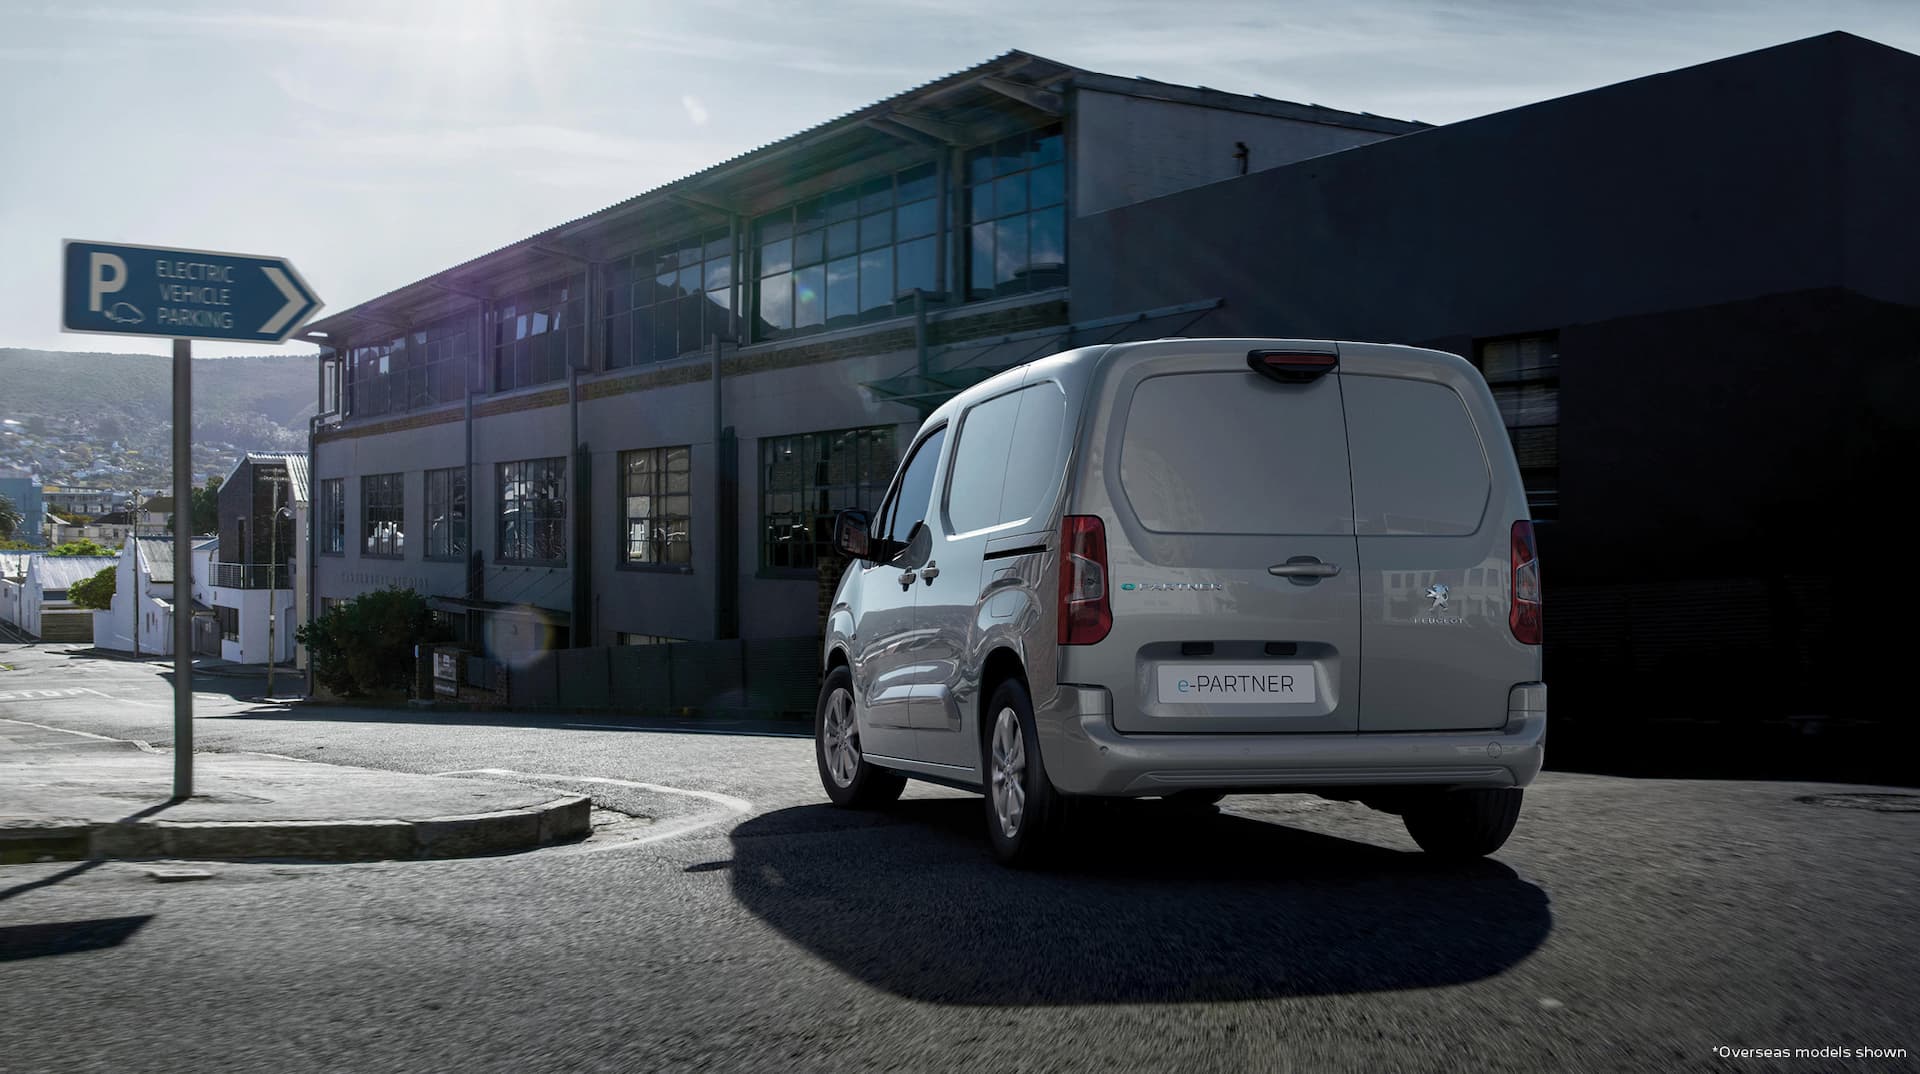 Peugeot e-Partner van charging port and rear views